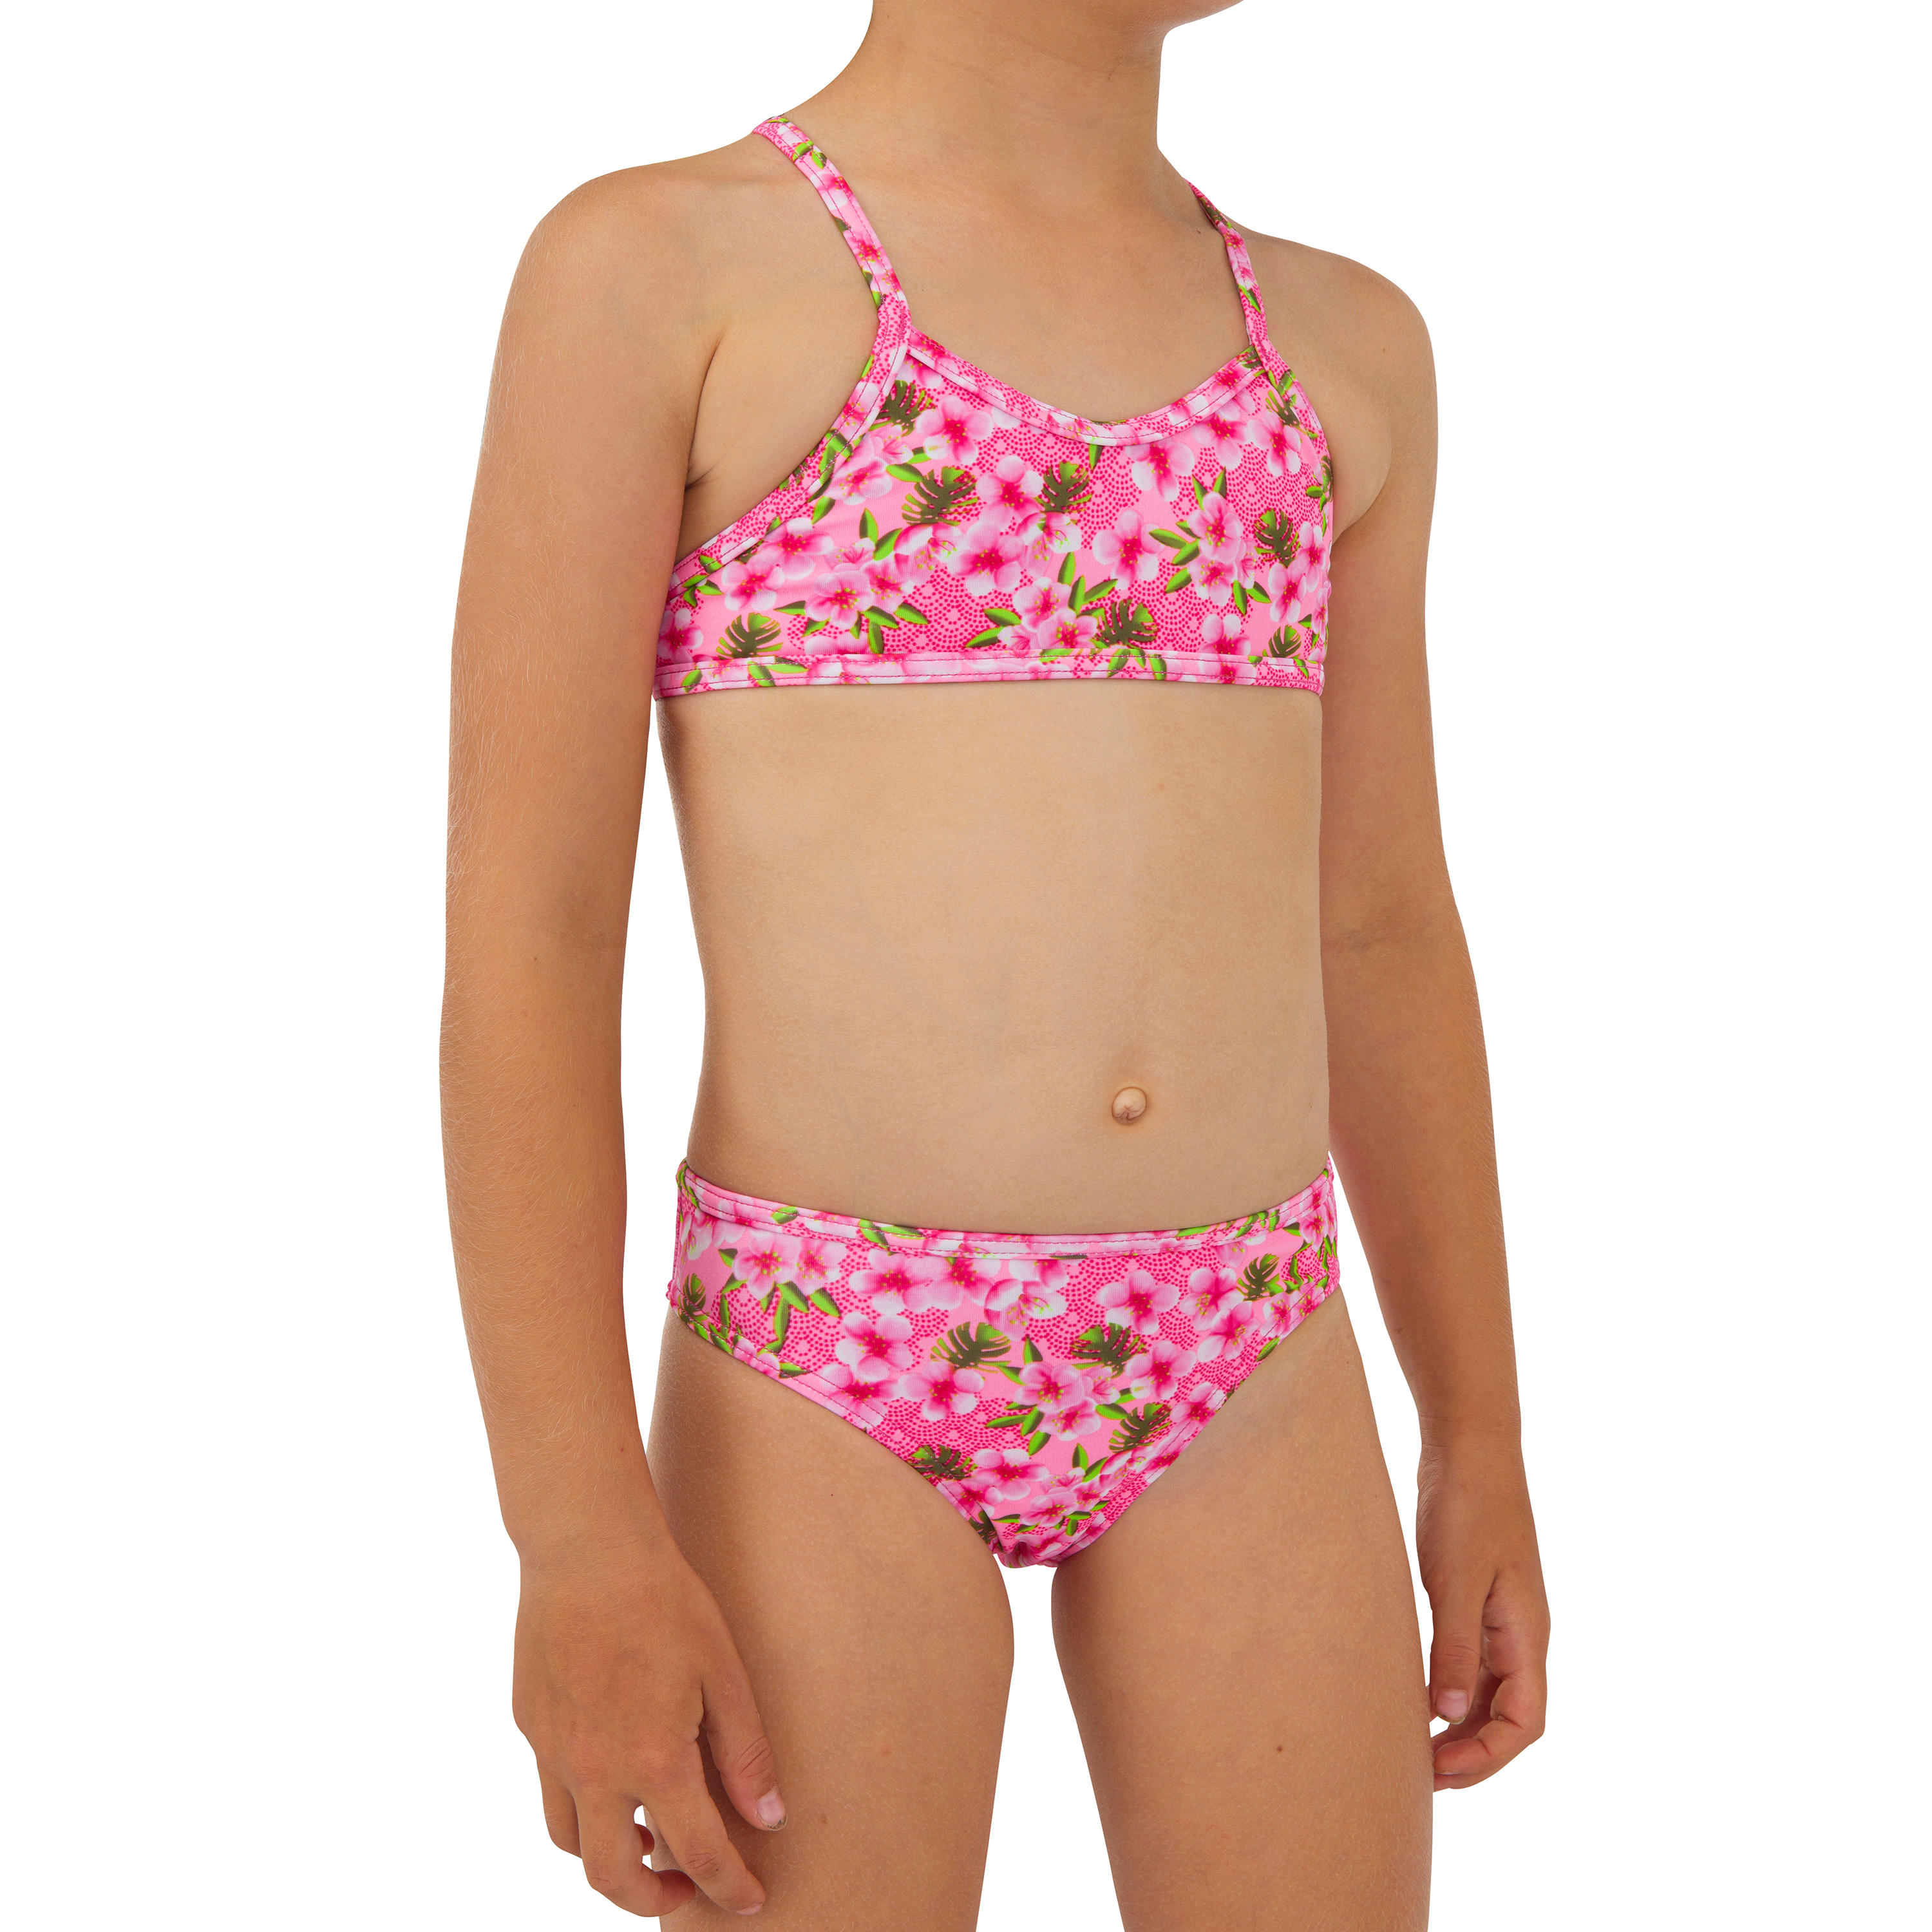 OLAIAN Bikini-Set Mädchen 100 Boni Sakura pink Gr. 116 - 6 Jahre